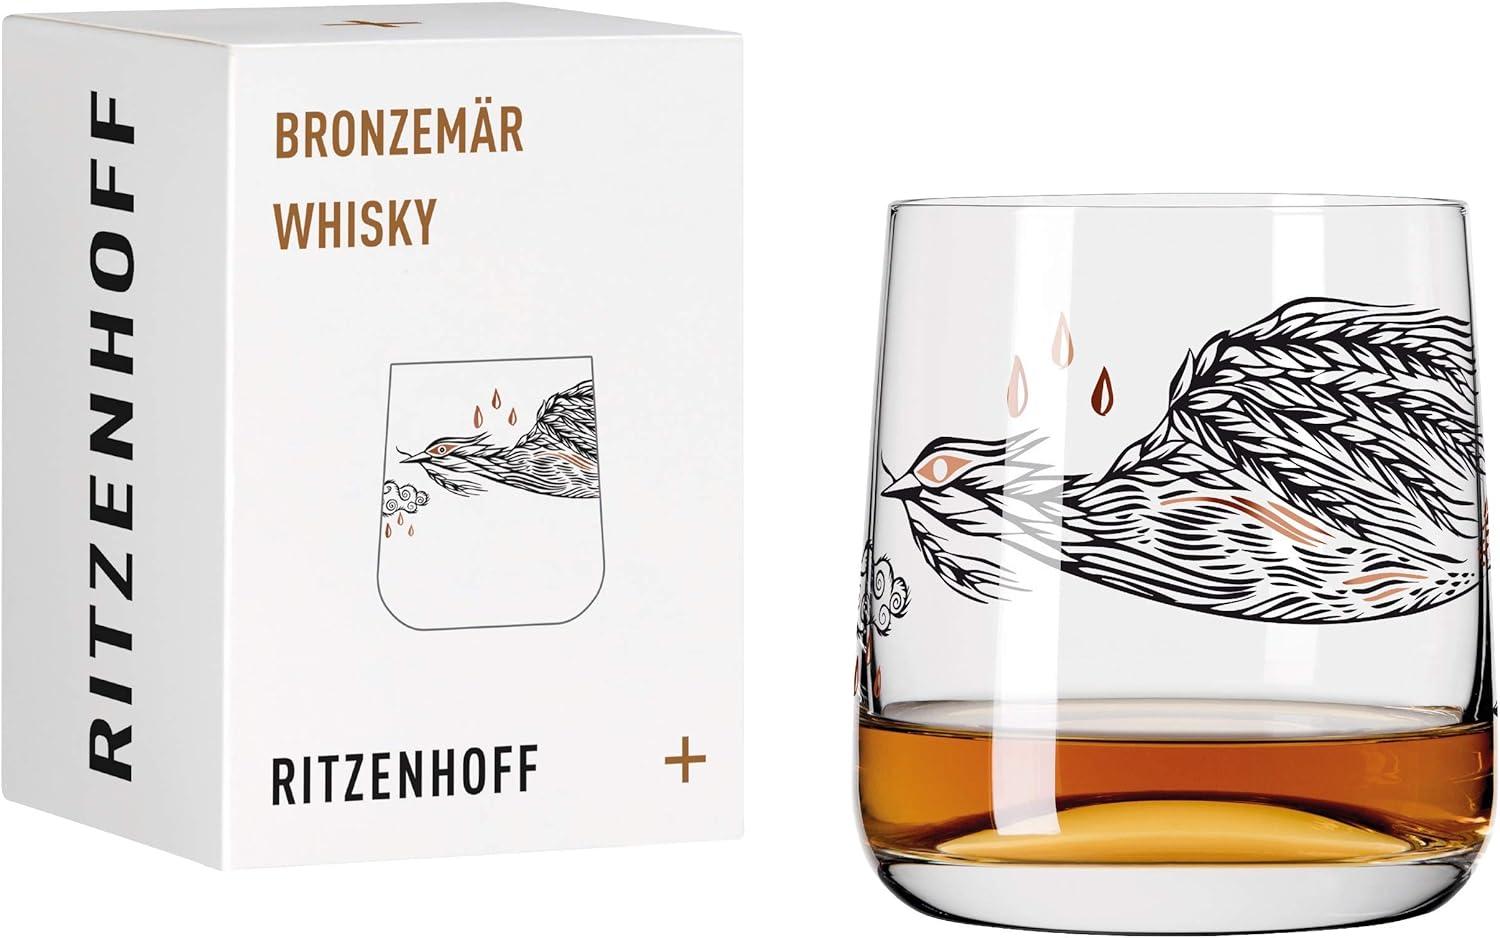 Ritzenhoff Bronzemär Whisky 002 Hajek 2017 / Whiskyglas Bild 1